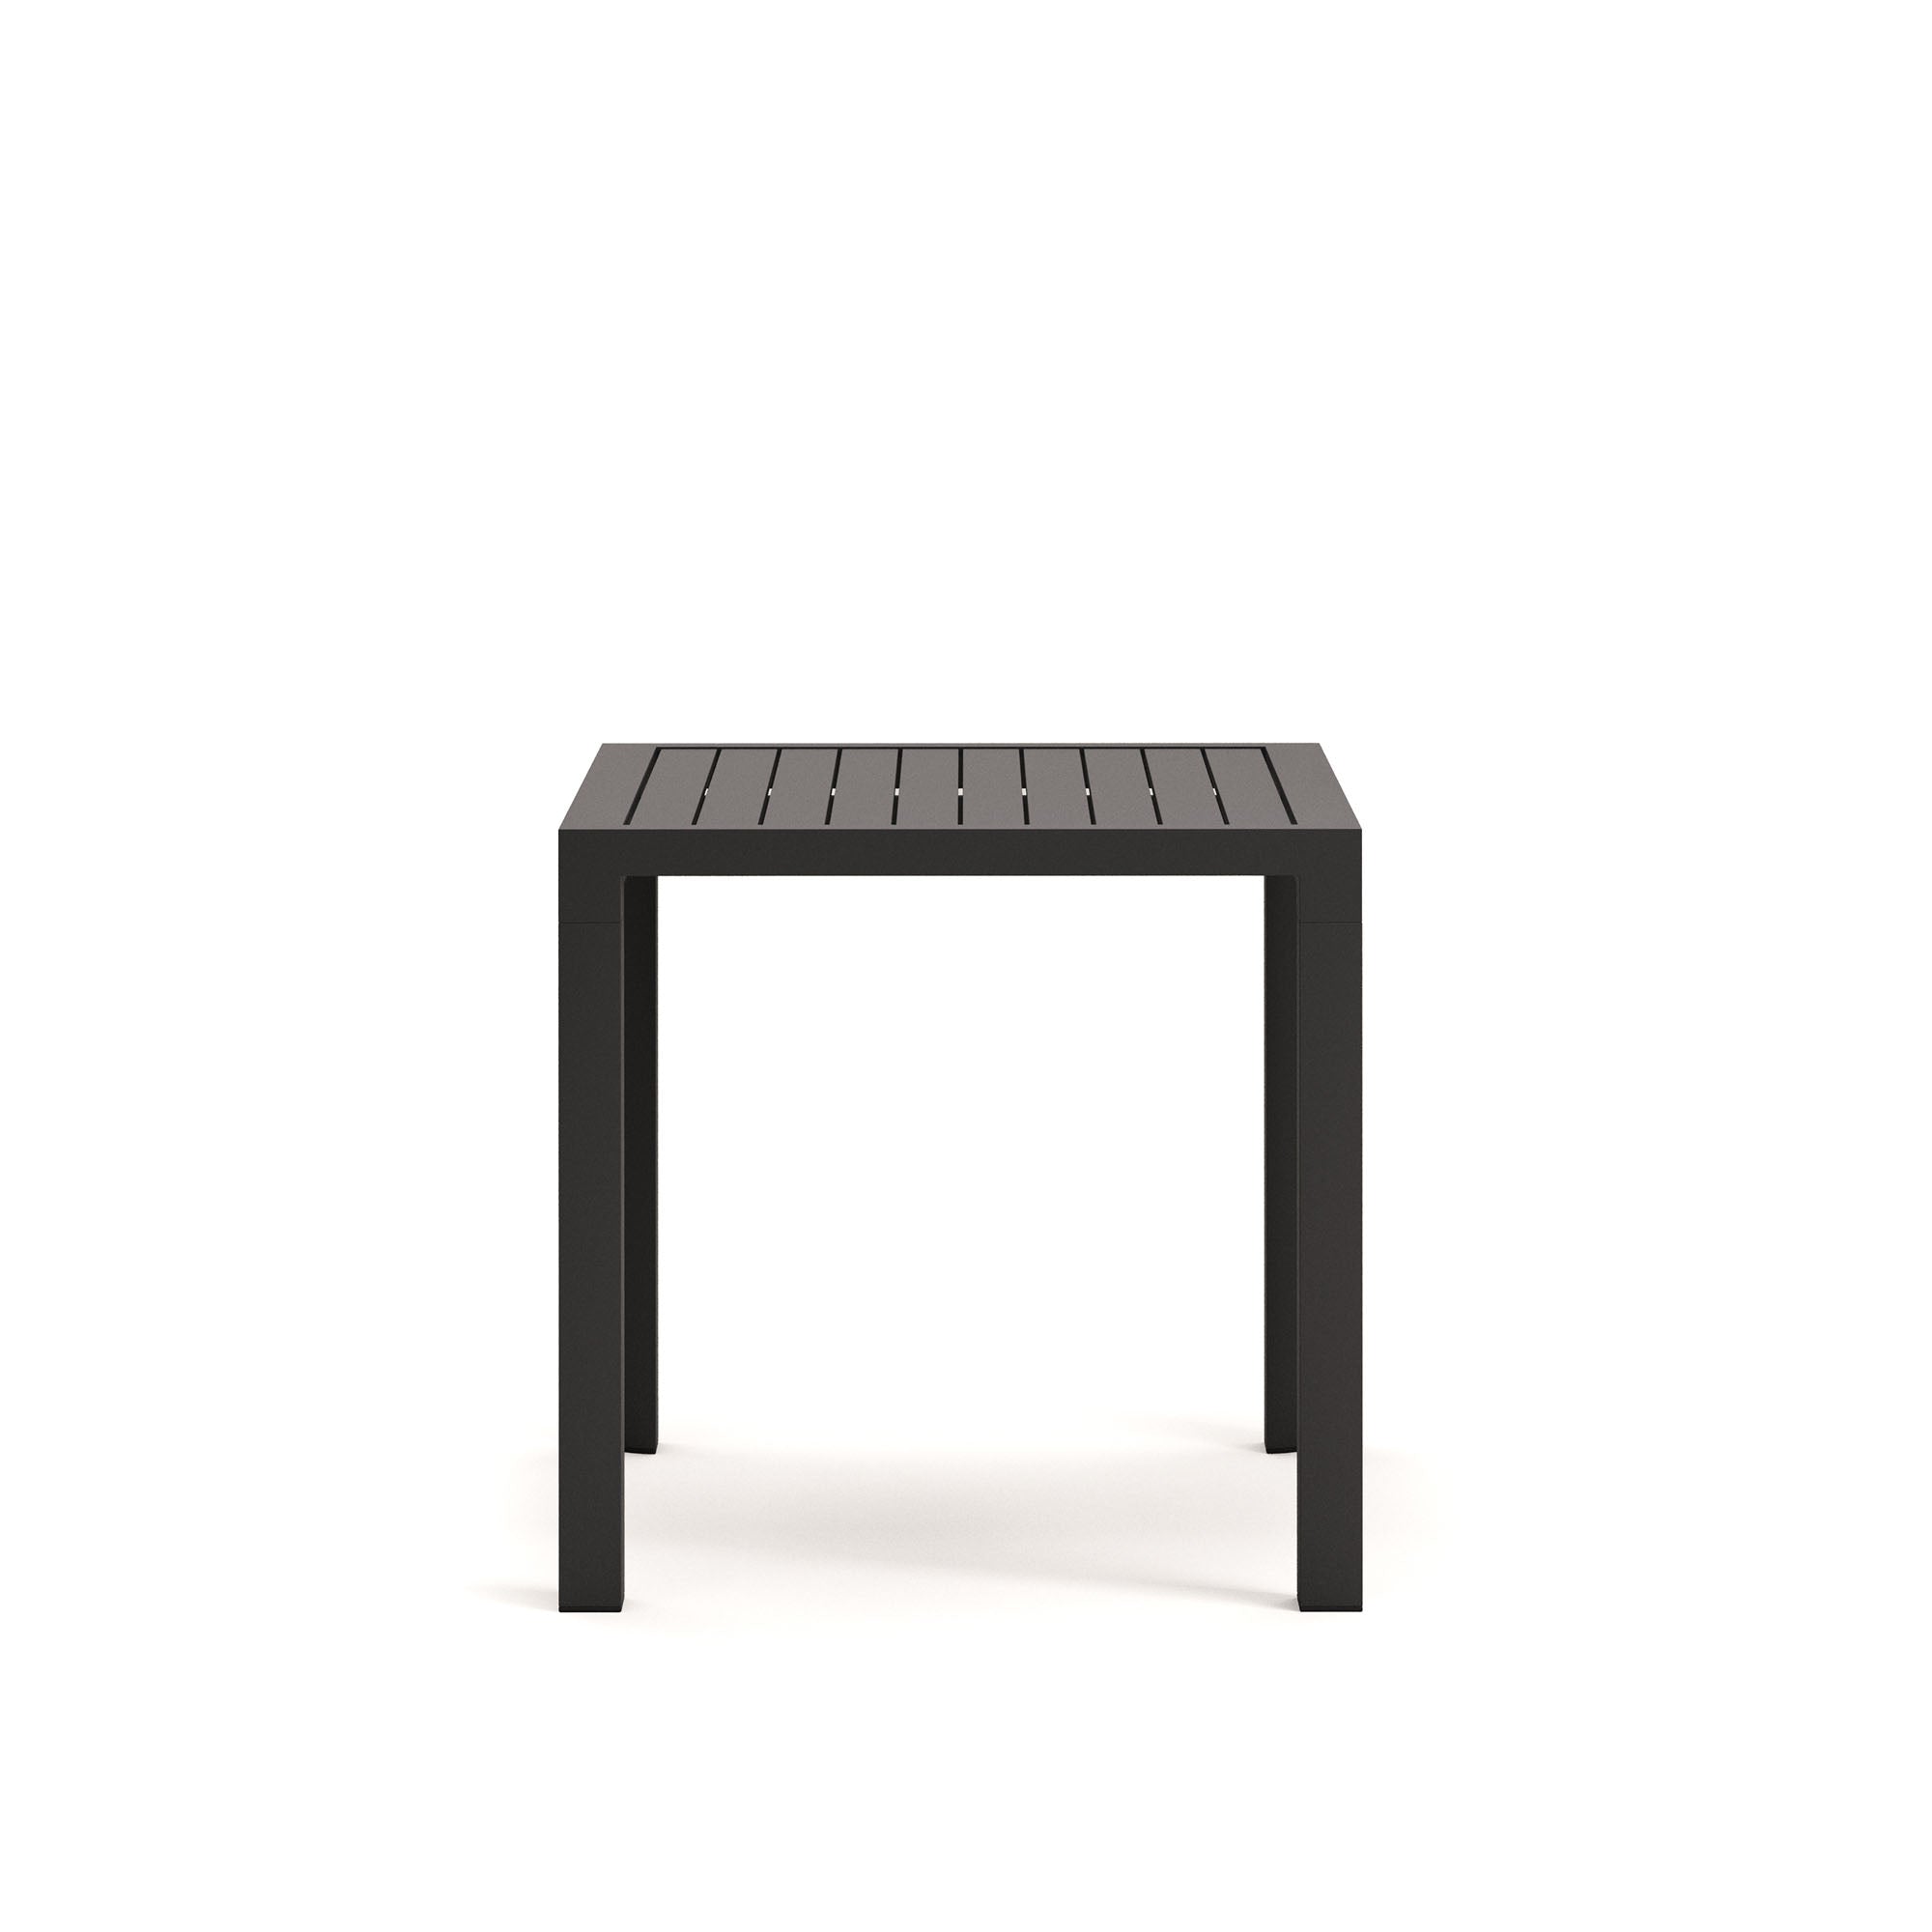 Culip aluminium outdoor table in powder coated grey finish, 77 x 77 cm